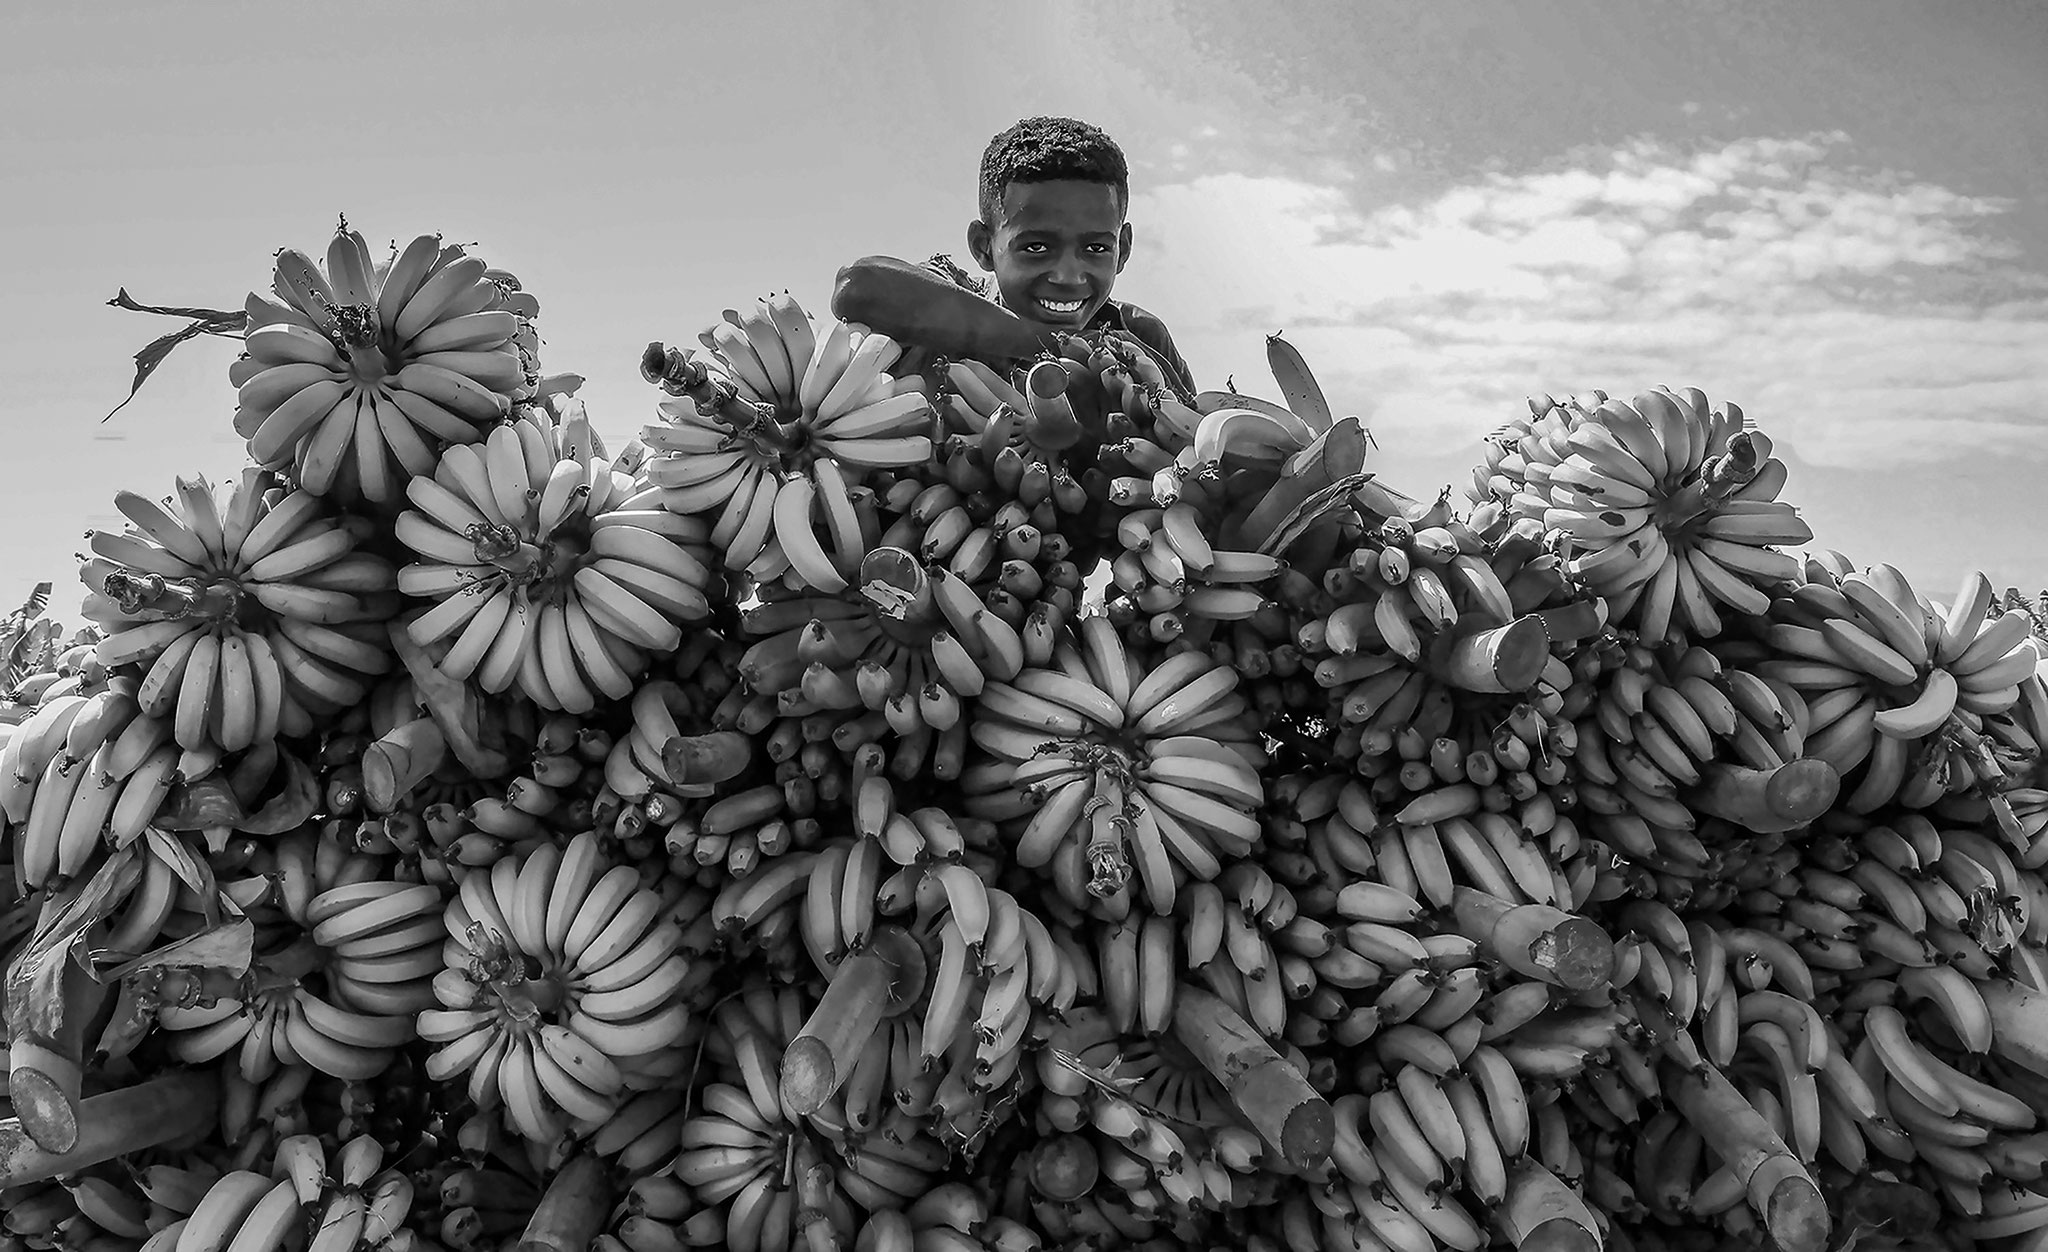 Ahmed Al-Abdulaal (Saudi Arabia) - Kid selling bananas bw